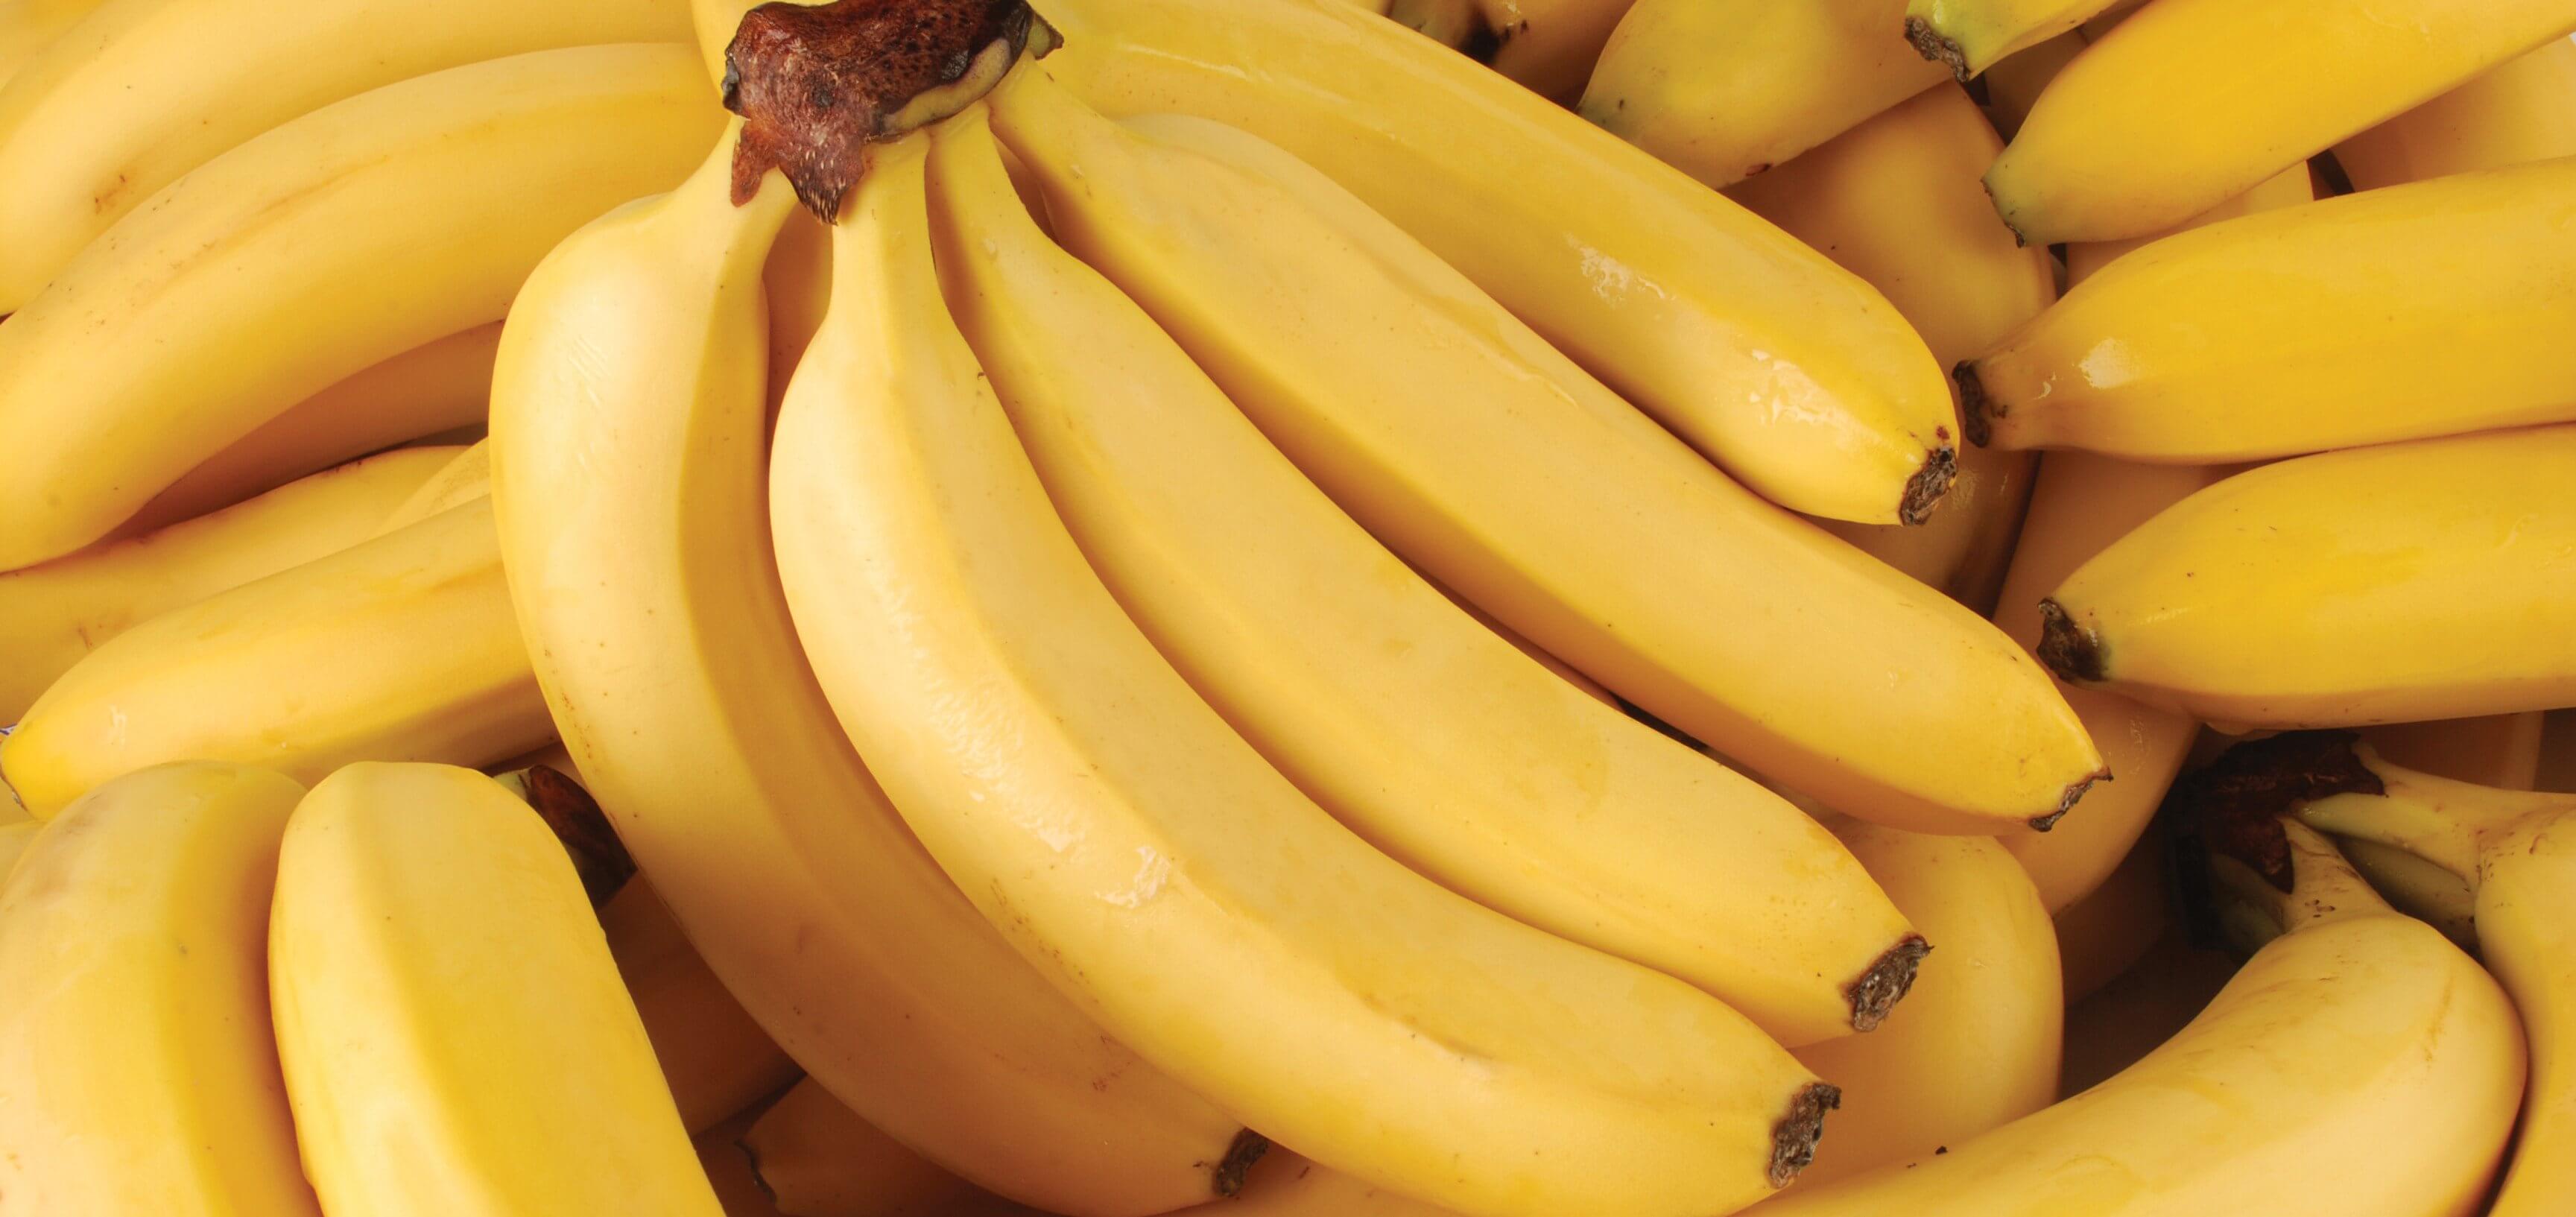 Resultado de imagen para banana